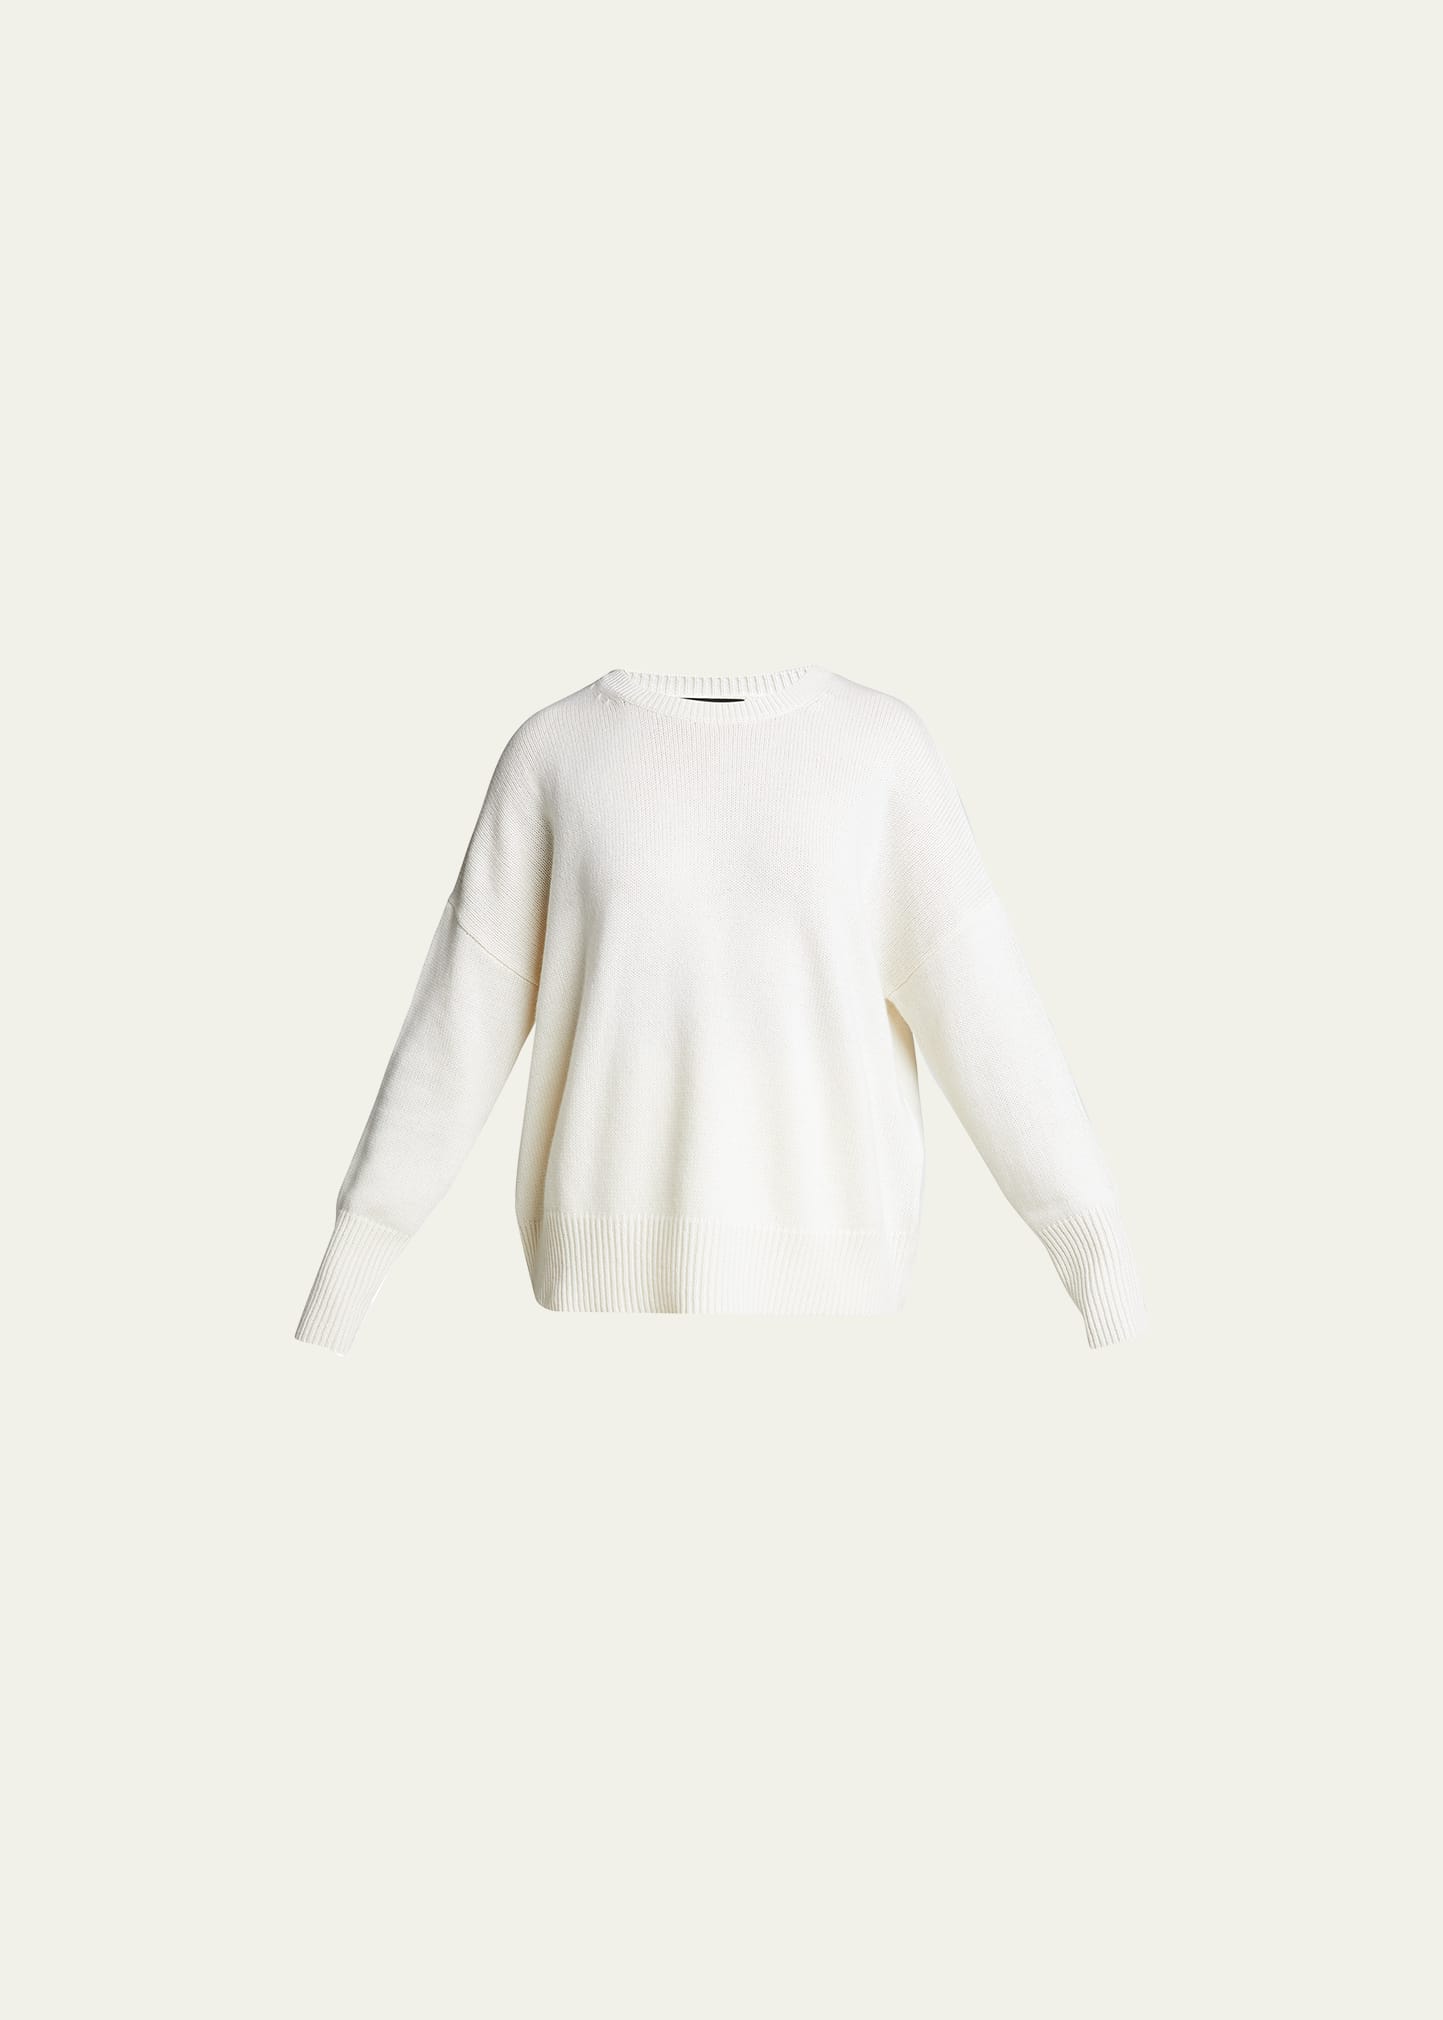 Lisa Yang The Mila Cashmere Drop-Shoulder Crewneck Sweater